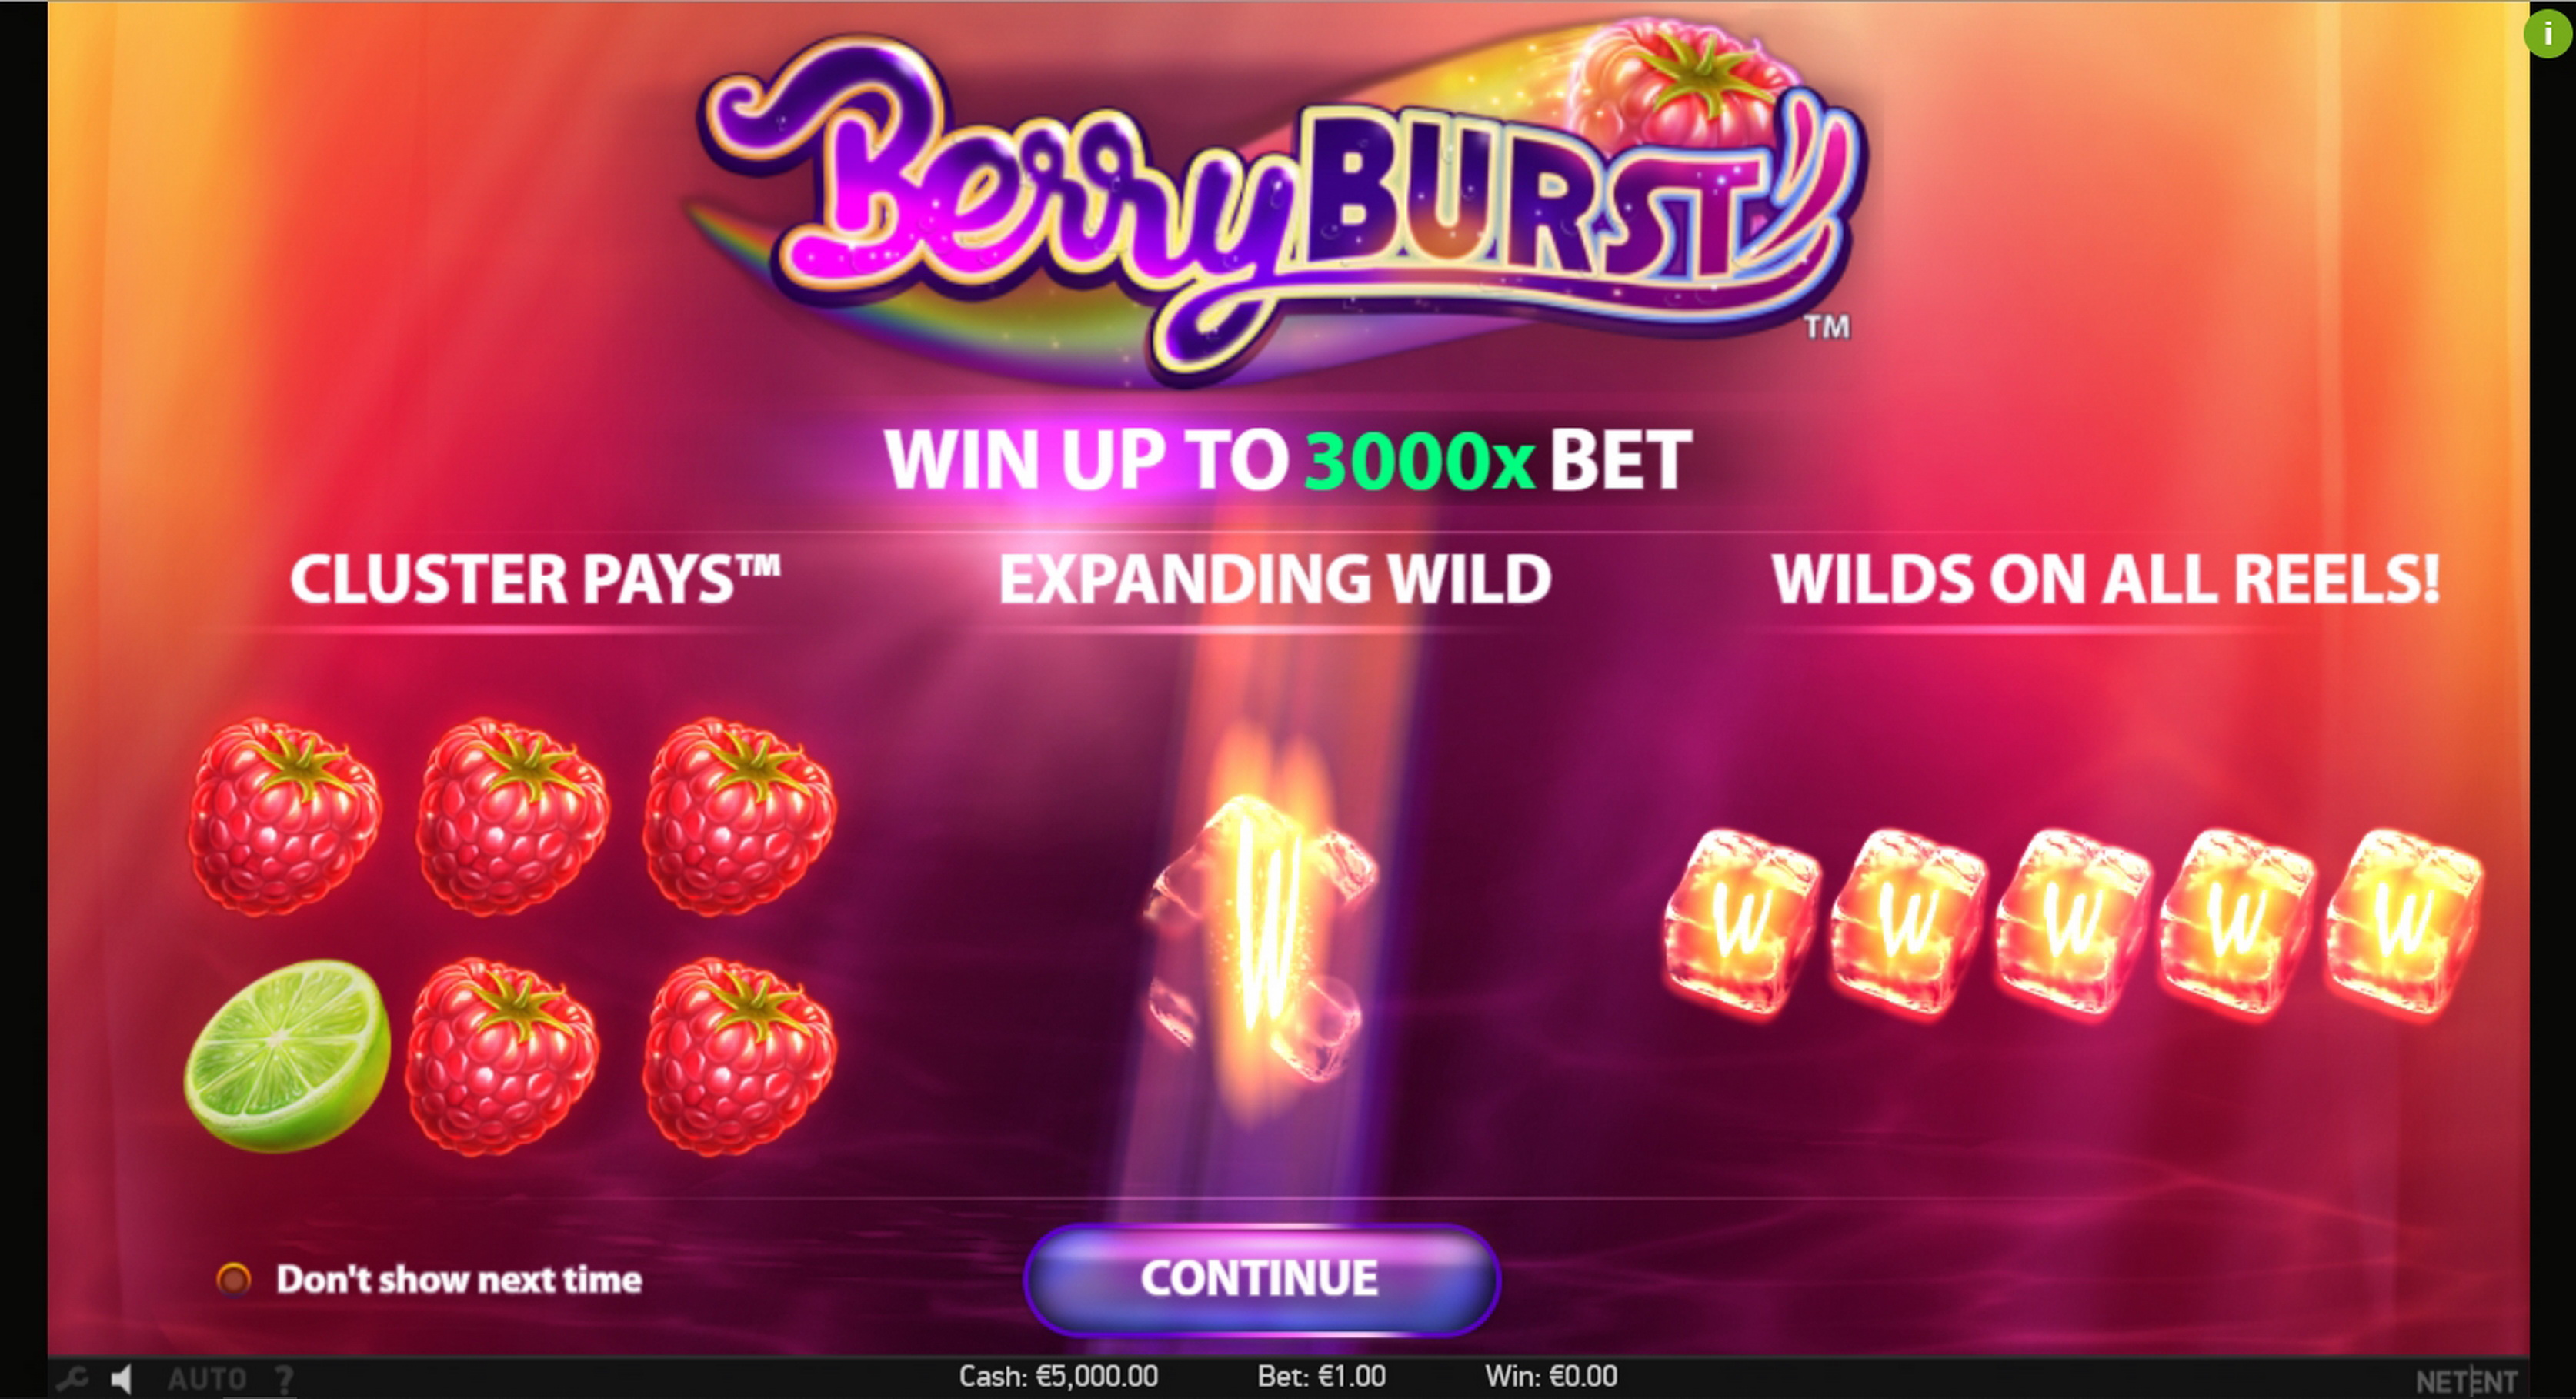 Play Berryburst Free Casino Slot Game by NetEnt